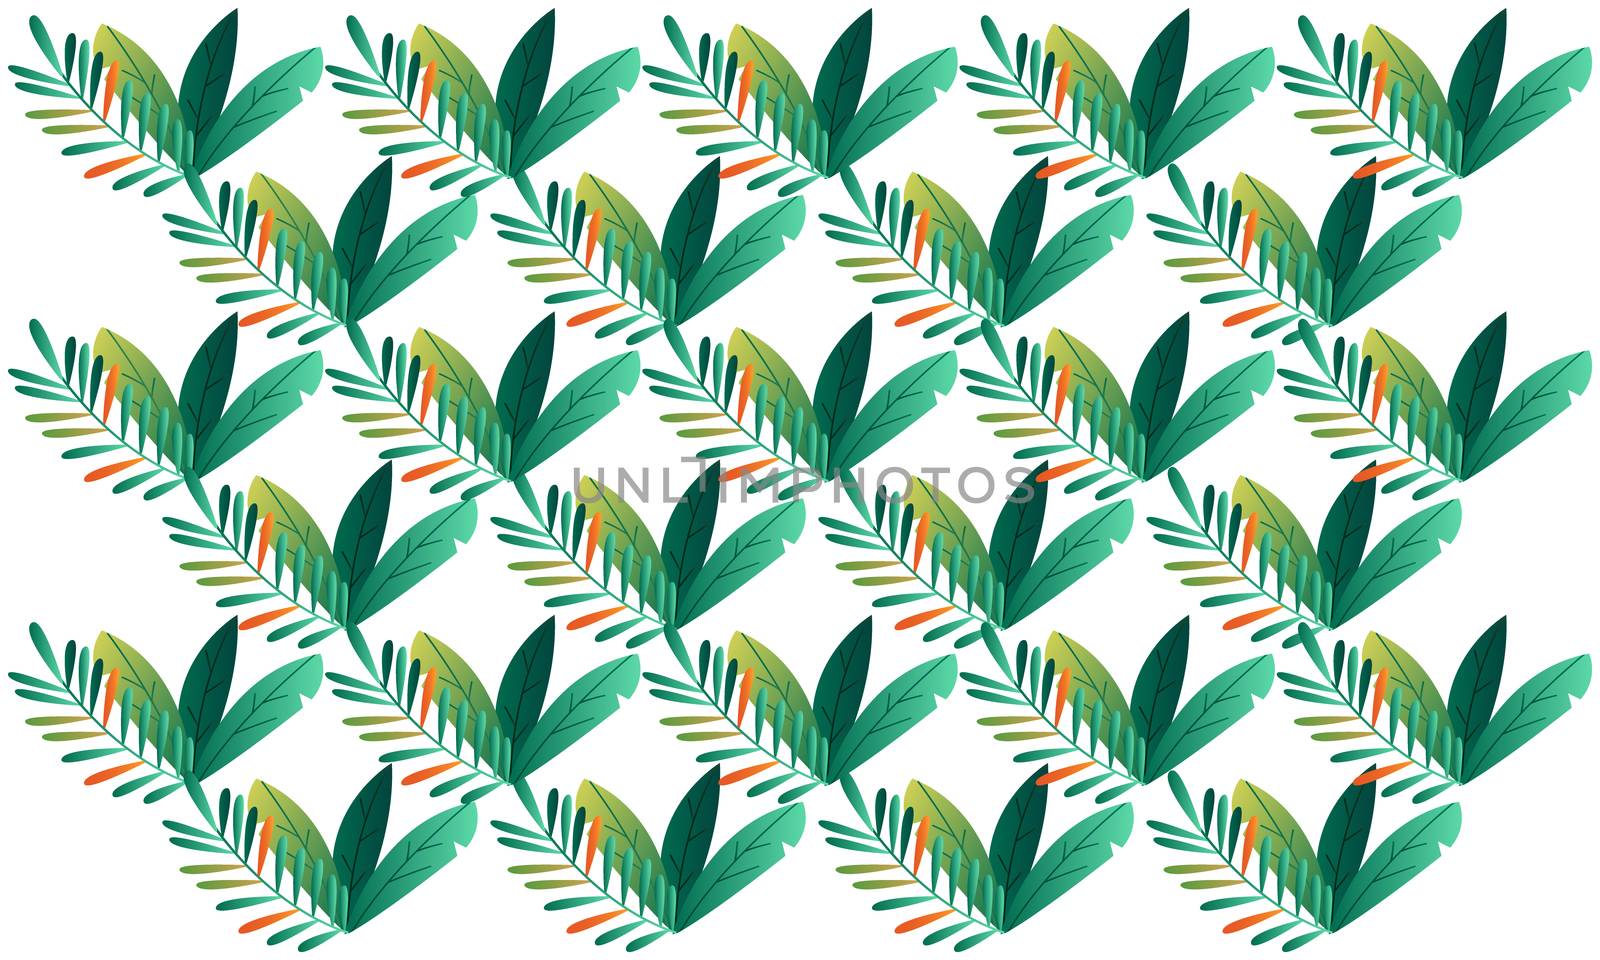 digital textile design of various leaves